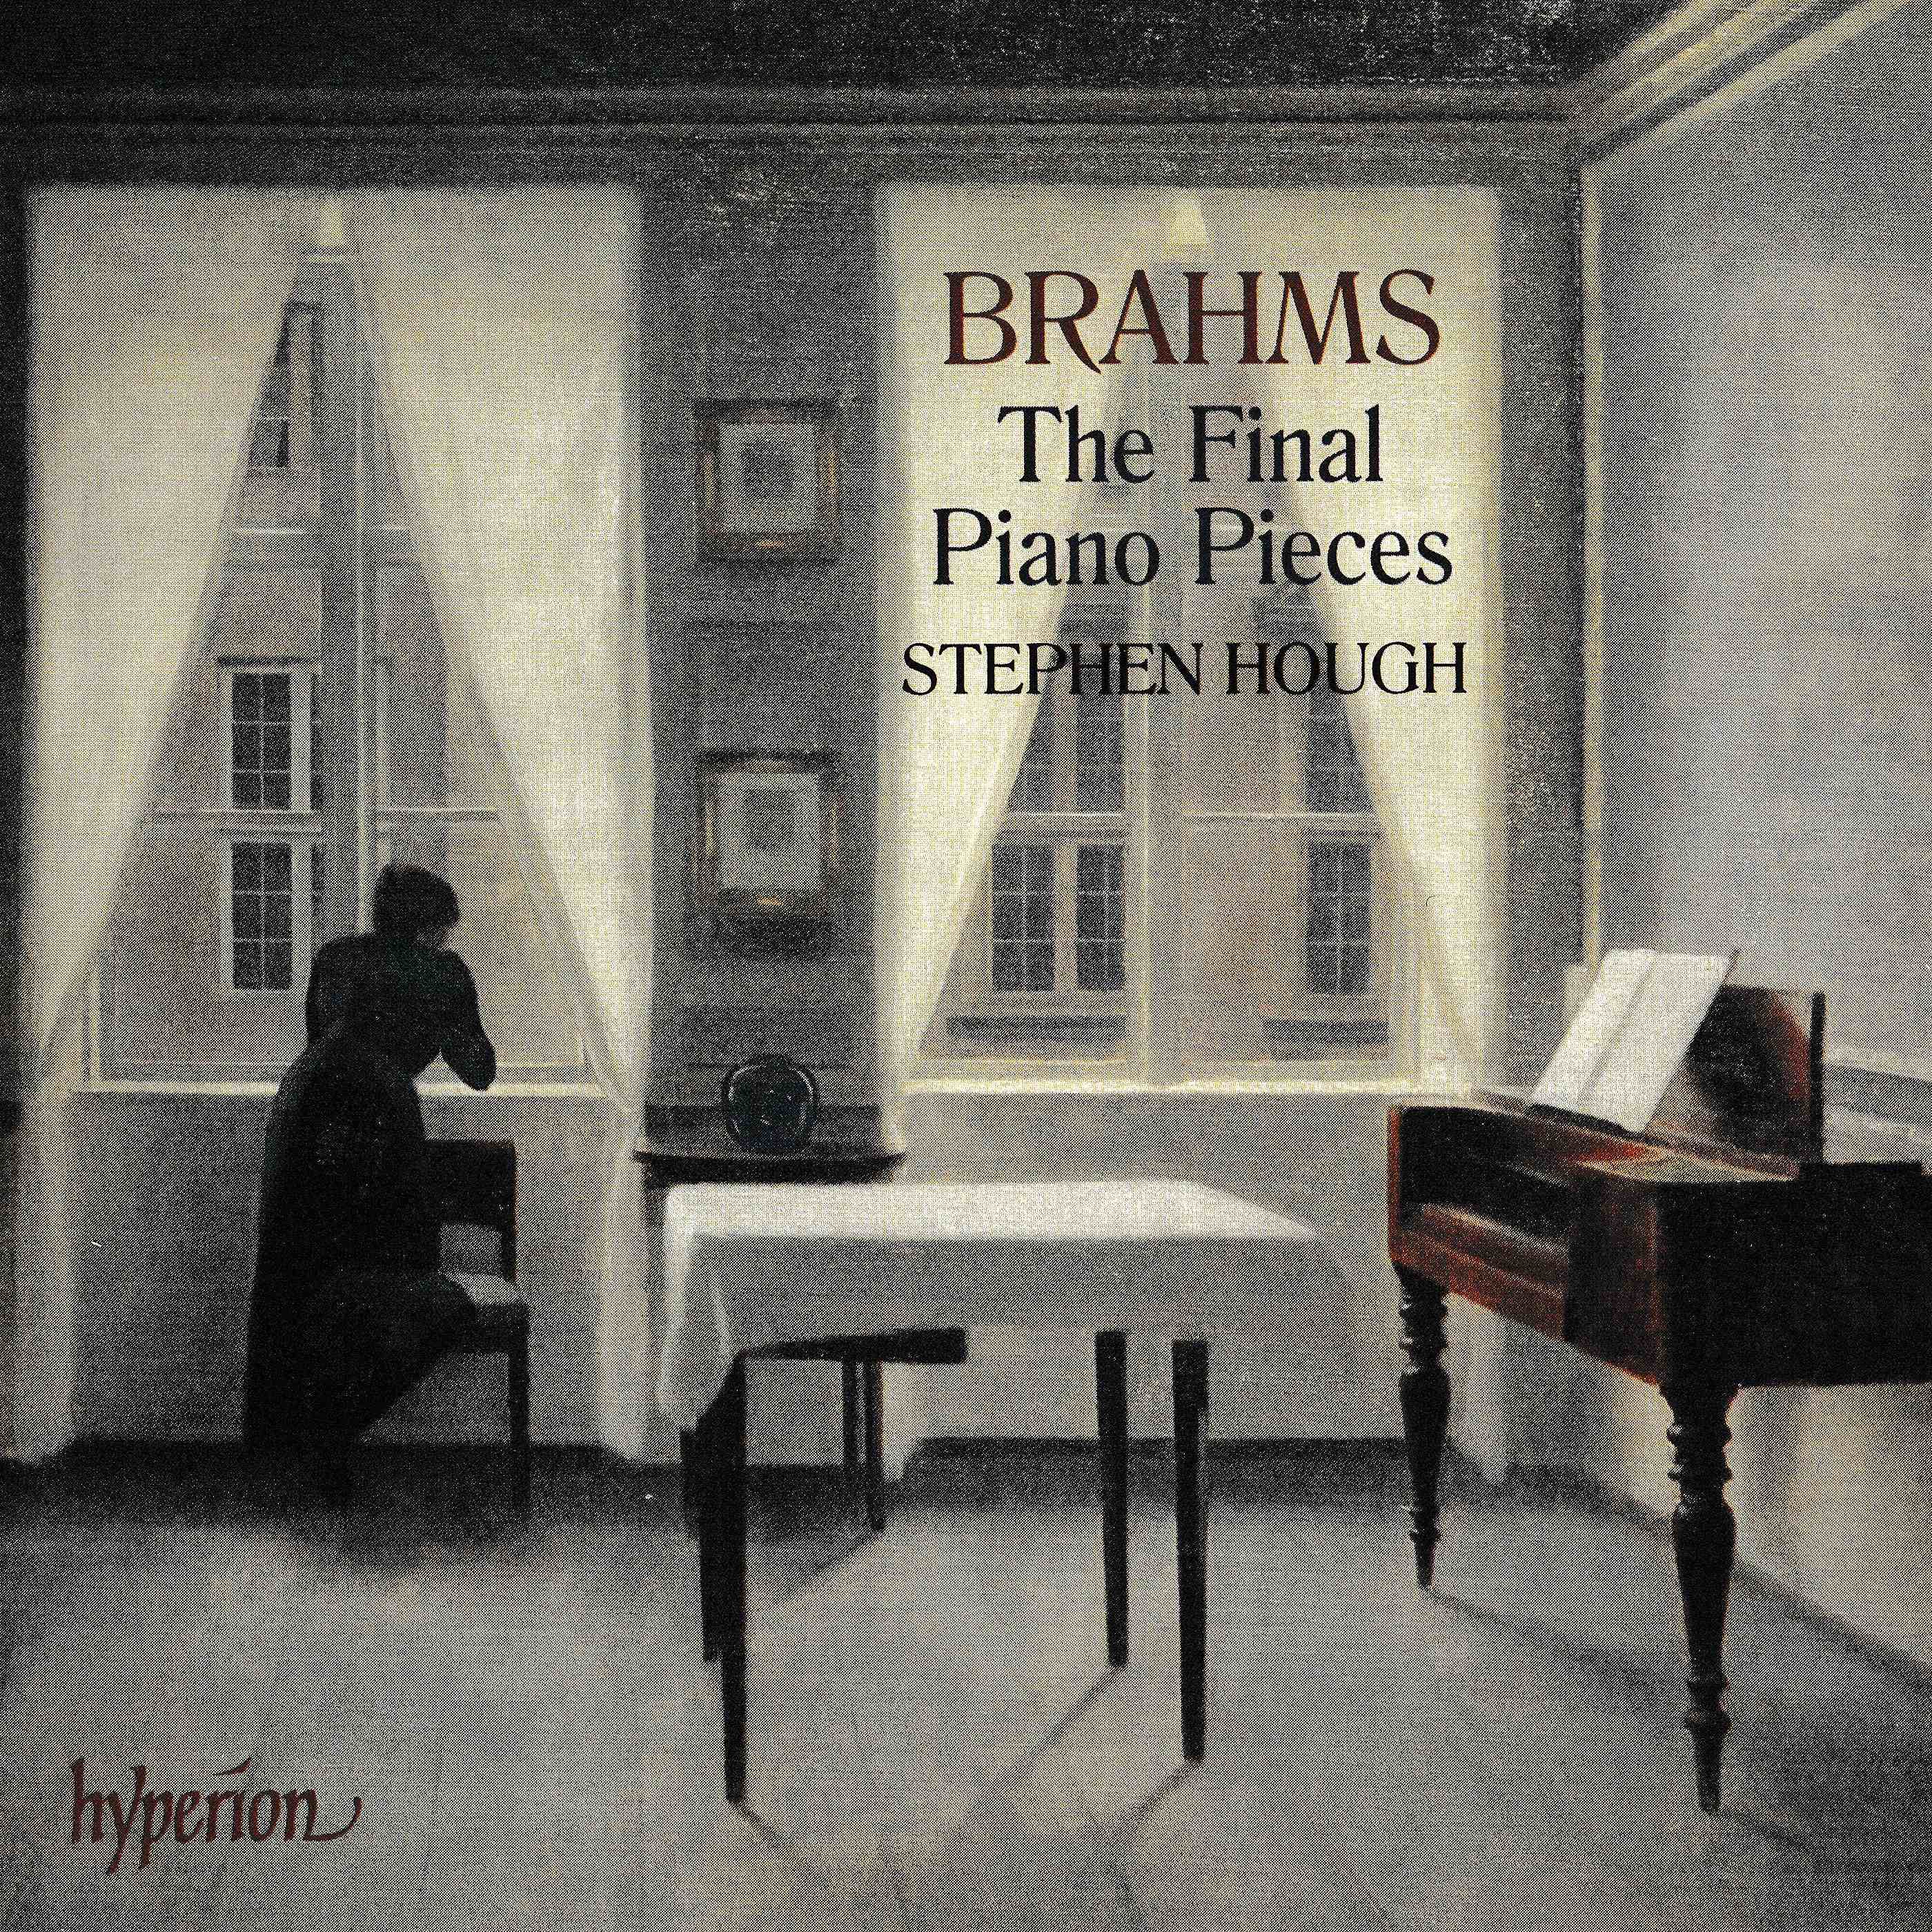 Johannes Brahms - The Final Piano Pieces - Stephen Hough